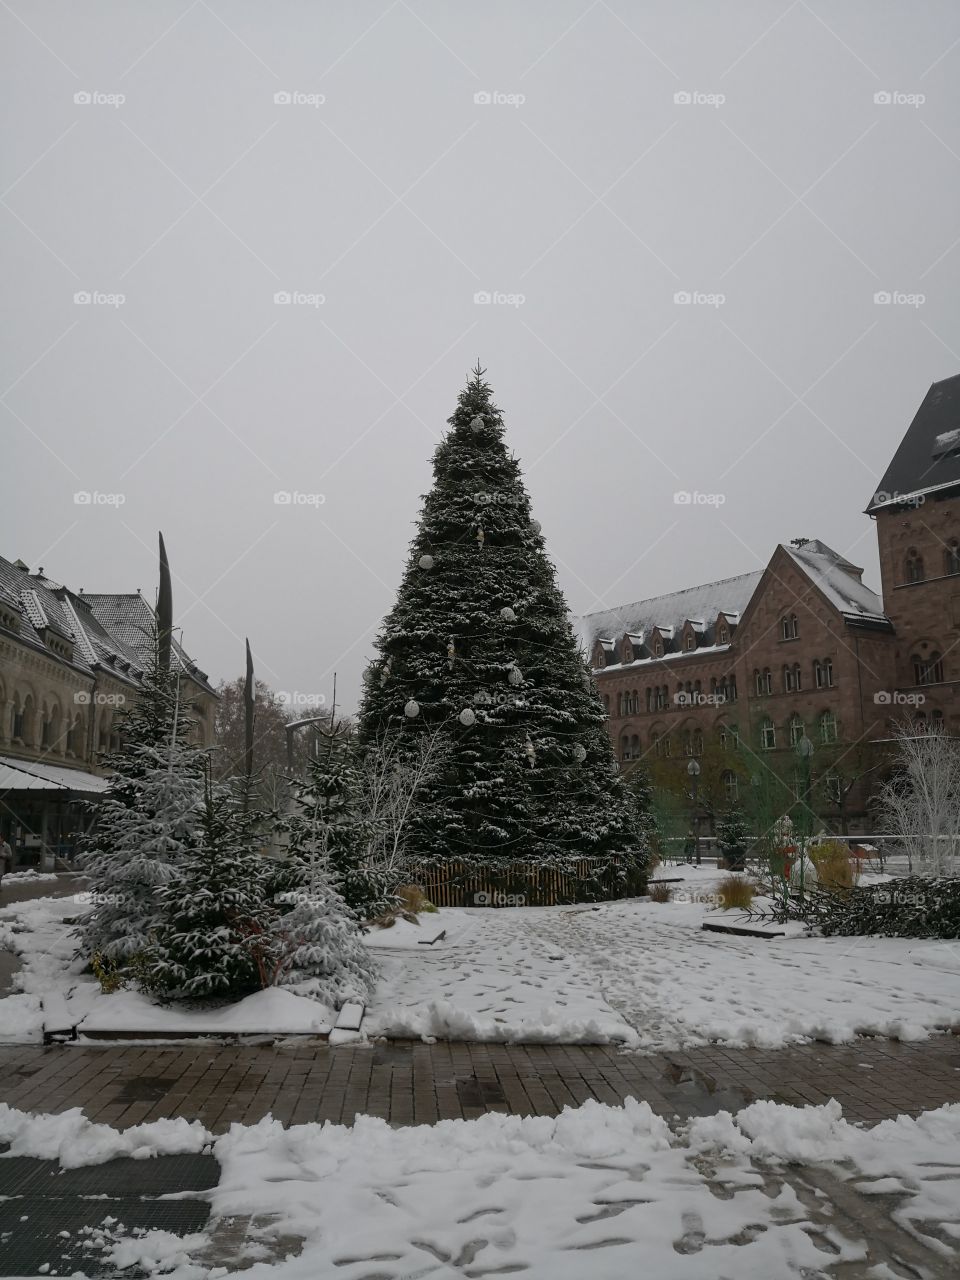 Christmas Decorations, Tree, Snow, Metz, France